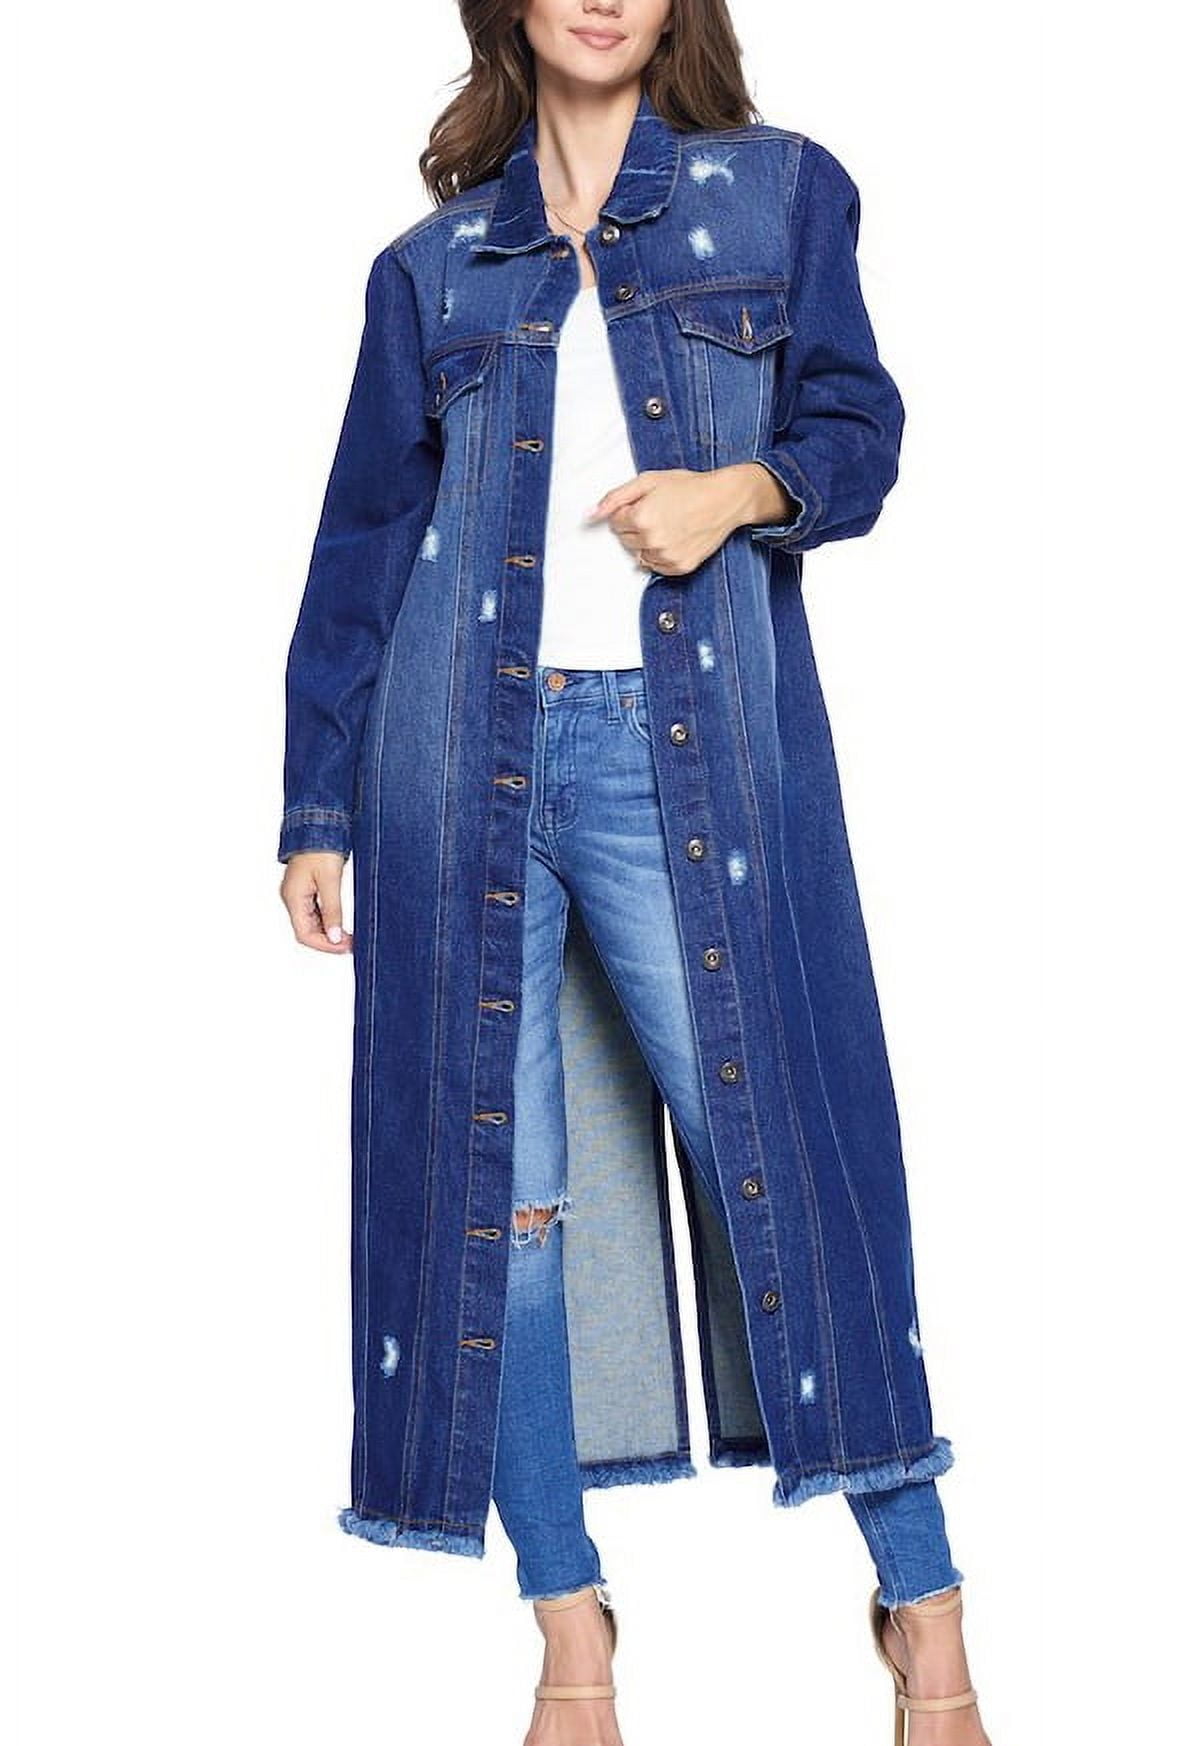 Women's Classic Distressed Cotton Denim Button Up Oversized Long Jean  Jacket (Dark Blue, L)